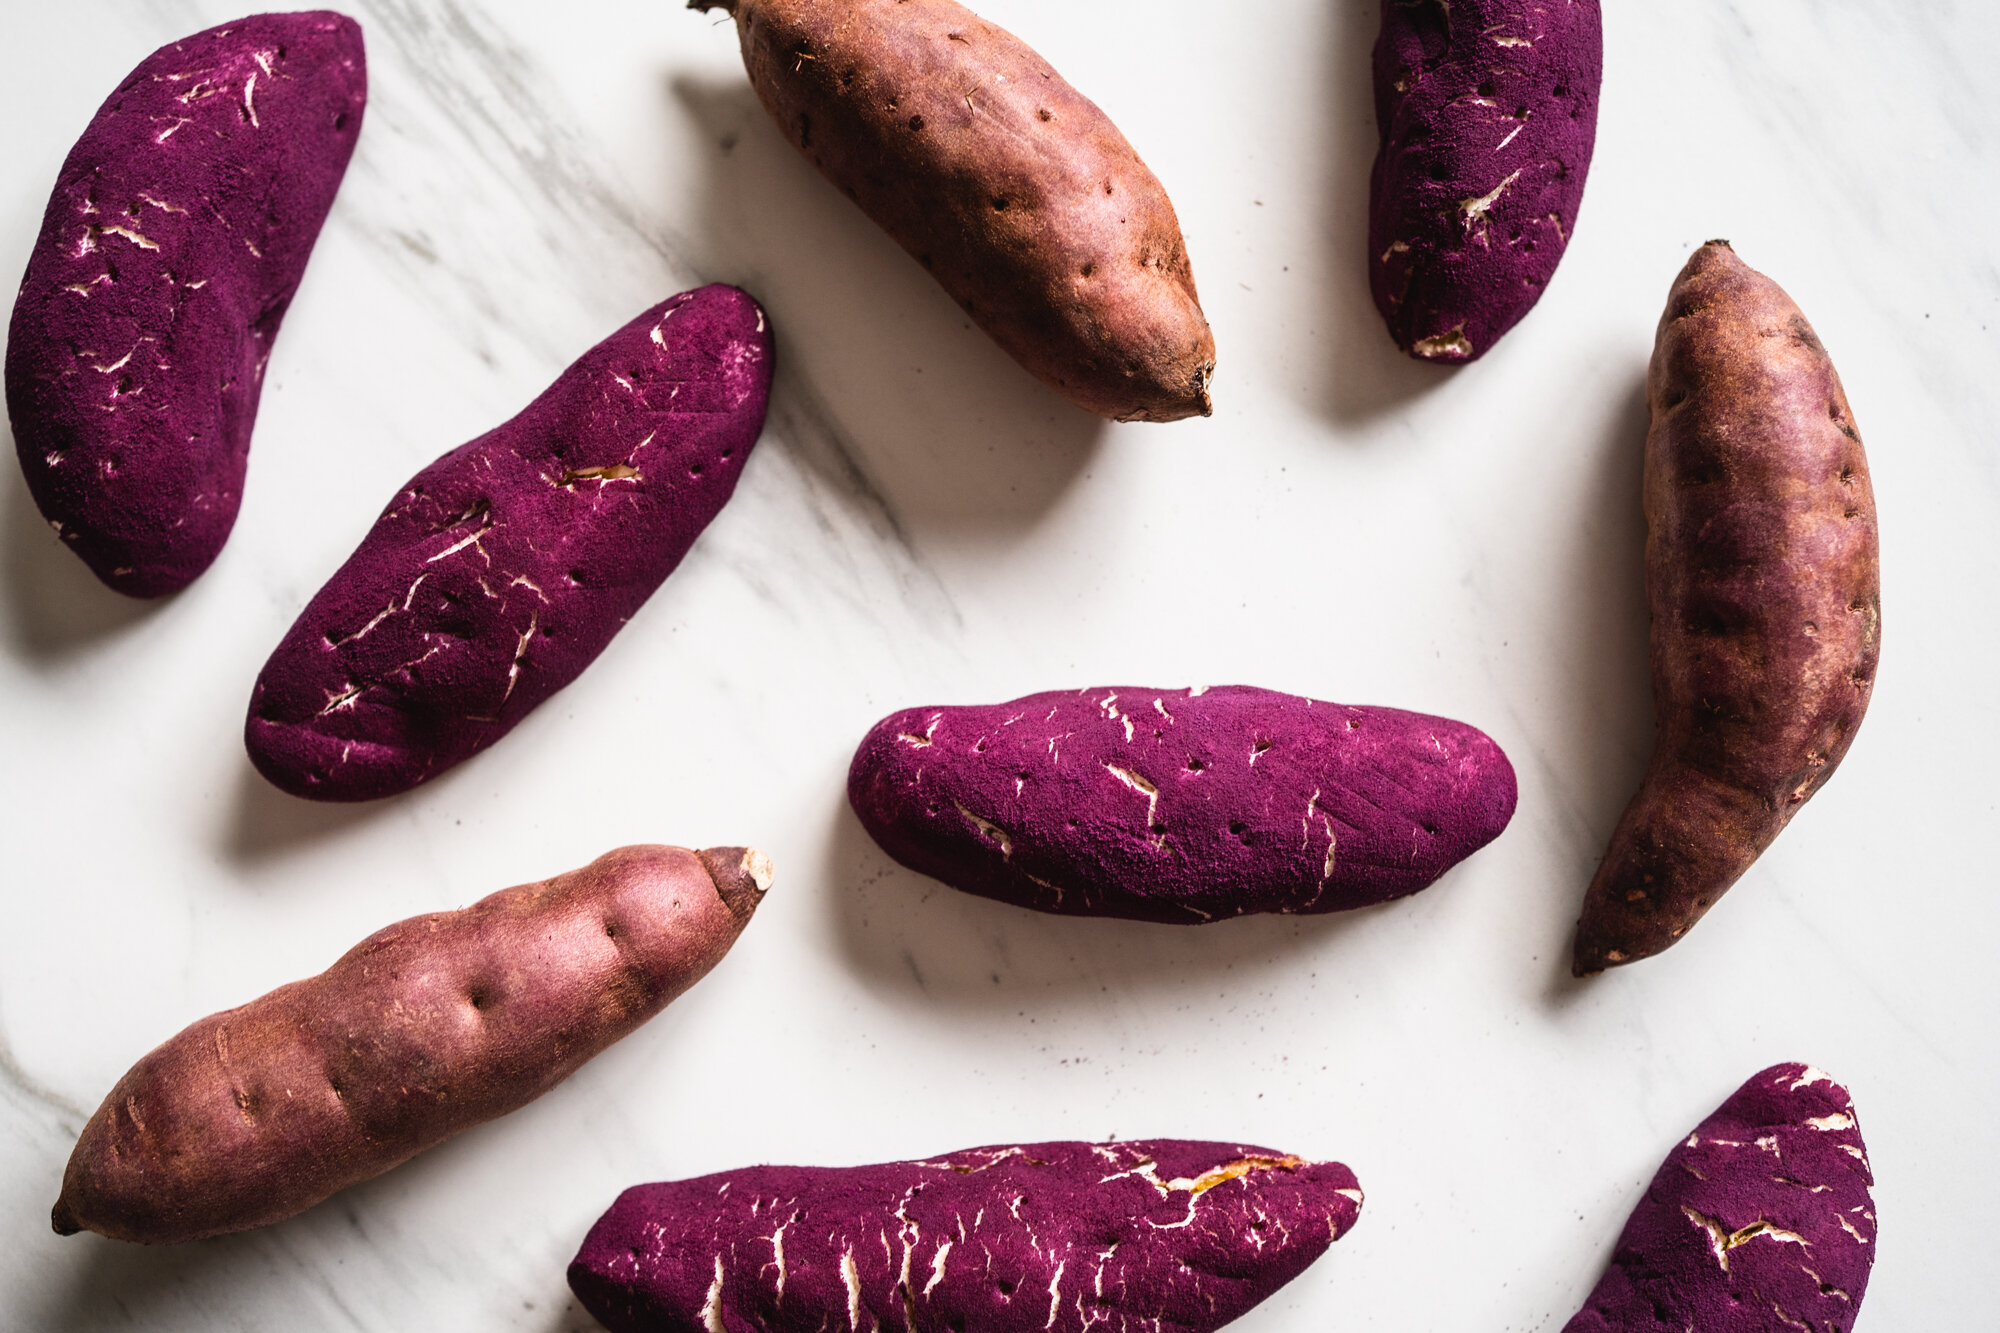 Purple Sweet Potatoes: Are They The Secret to Longevity?